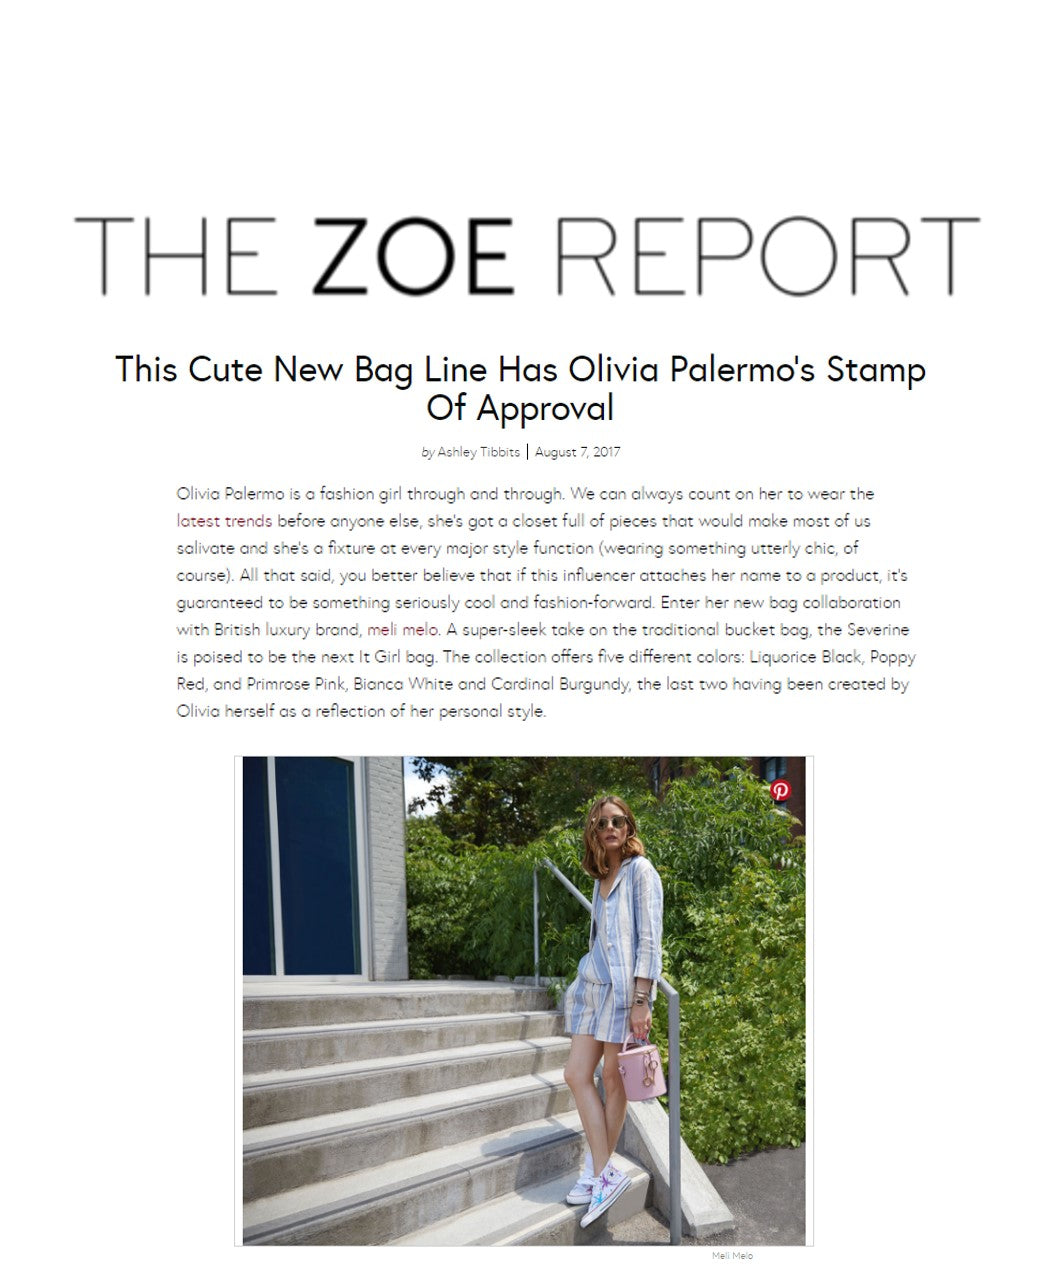 The Zoe report